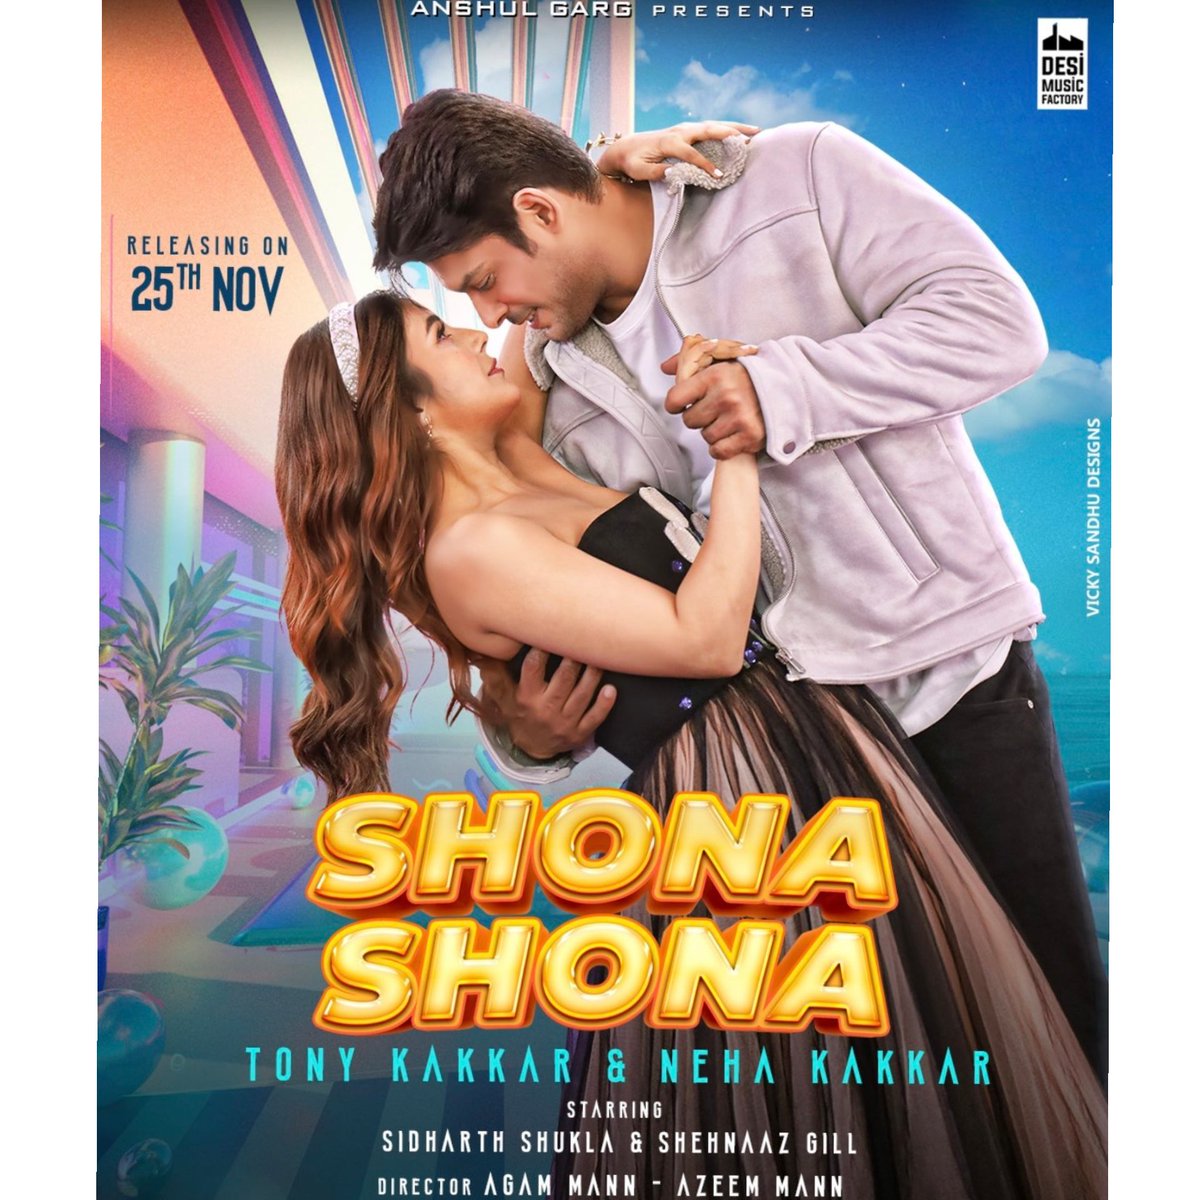 #ShonaShona featuring #SidharthShukla and #ShehnaazGill, with music/lyrics/vocals by #TonyKakkar along with #NehaKakkar drops on 25th November! Presented by #AnshulGarg. 🔥

@sidharth_shukla @ishehnaaz_gill @TonyKakkar @DesiMFactory @AnshulGarg80 #ShonaShonaOn25thNov #SidNaaz